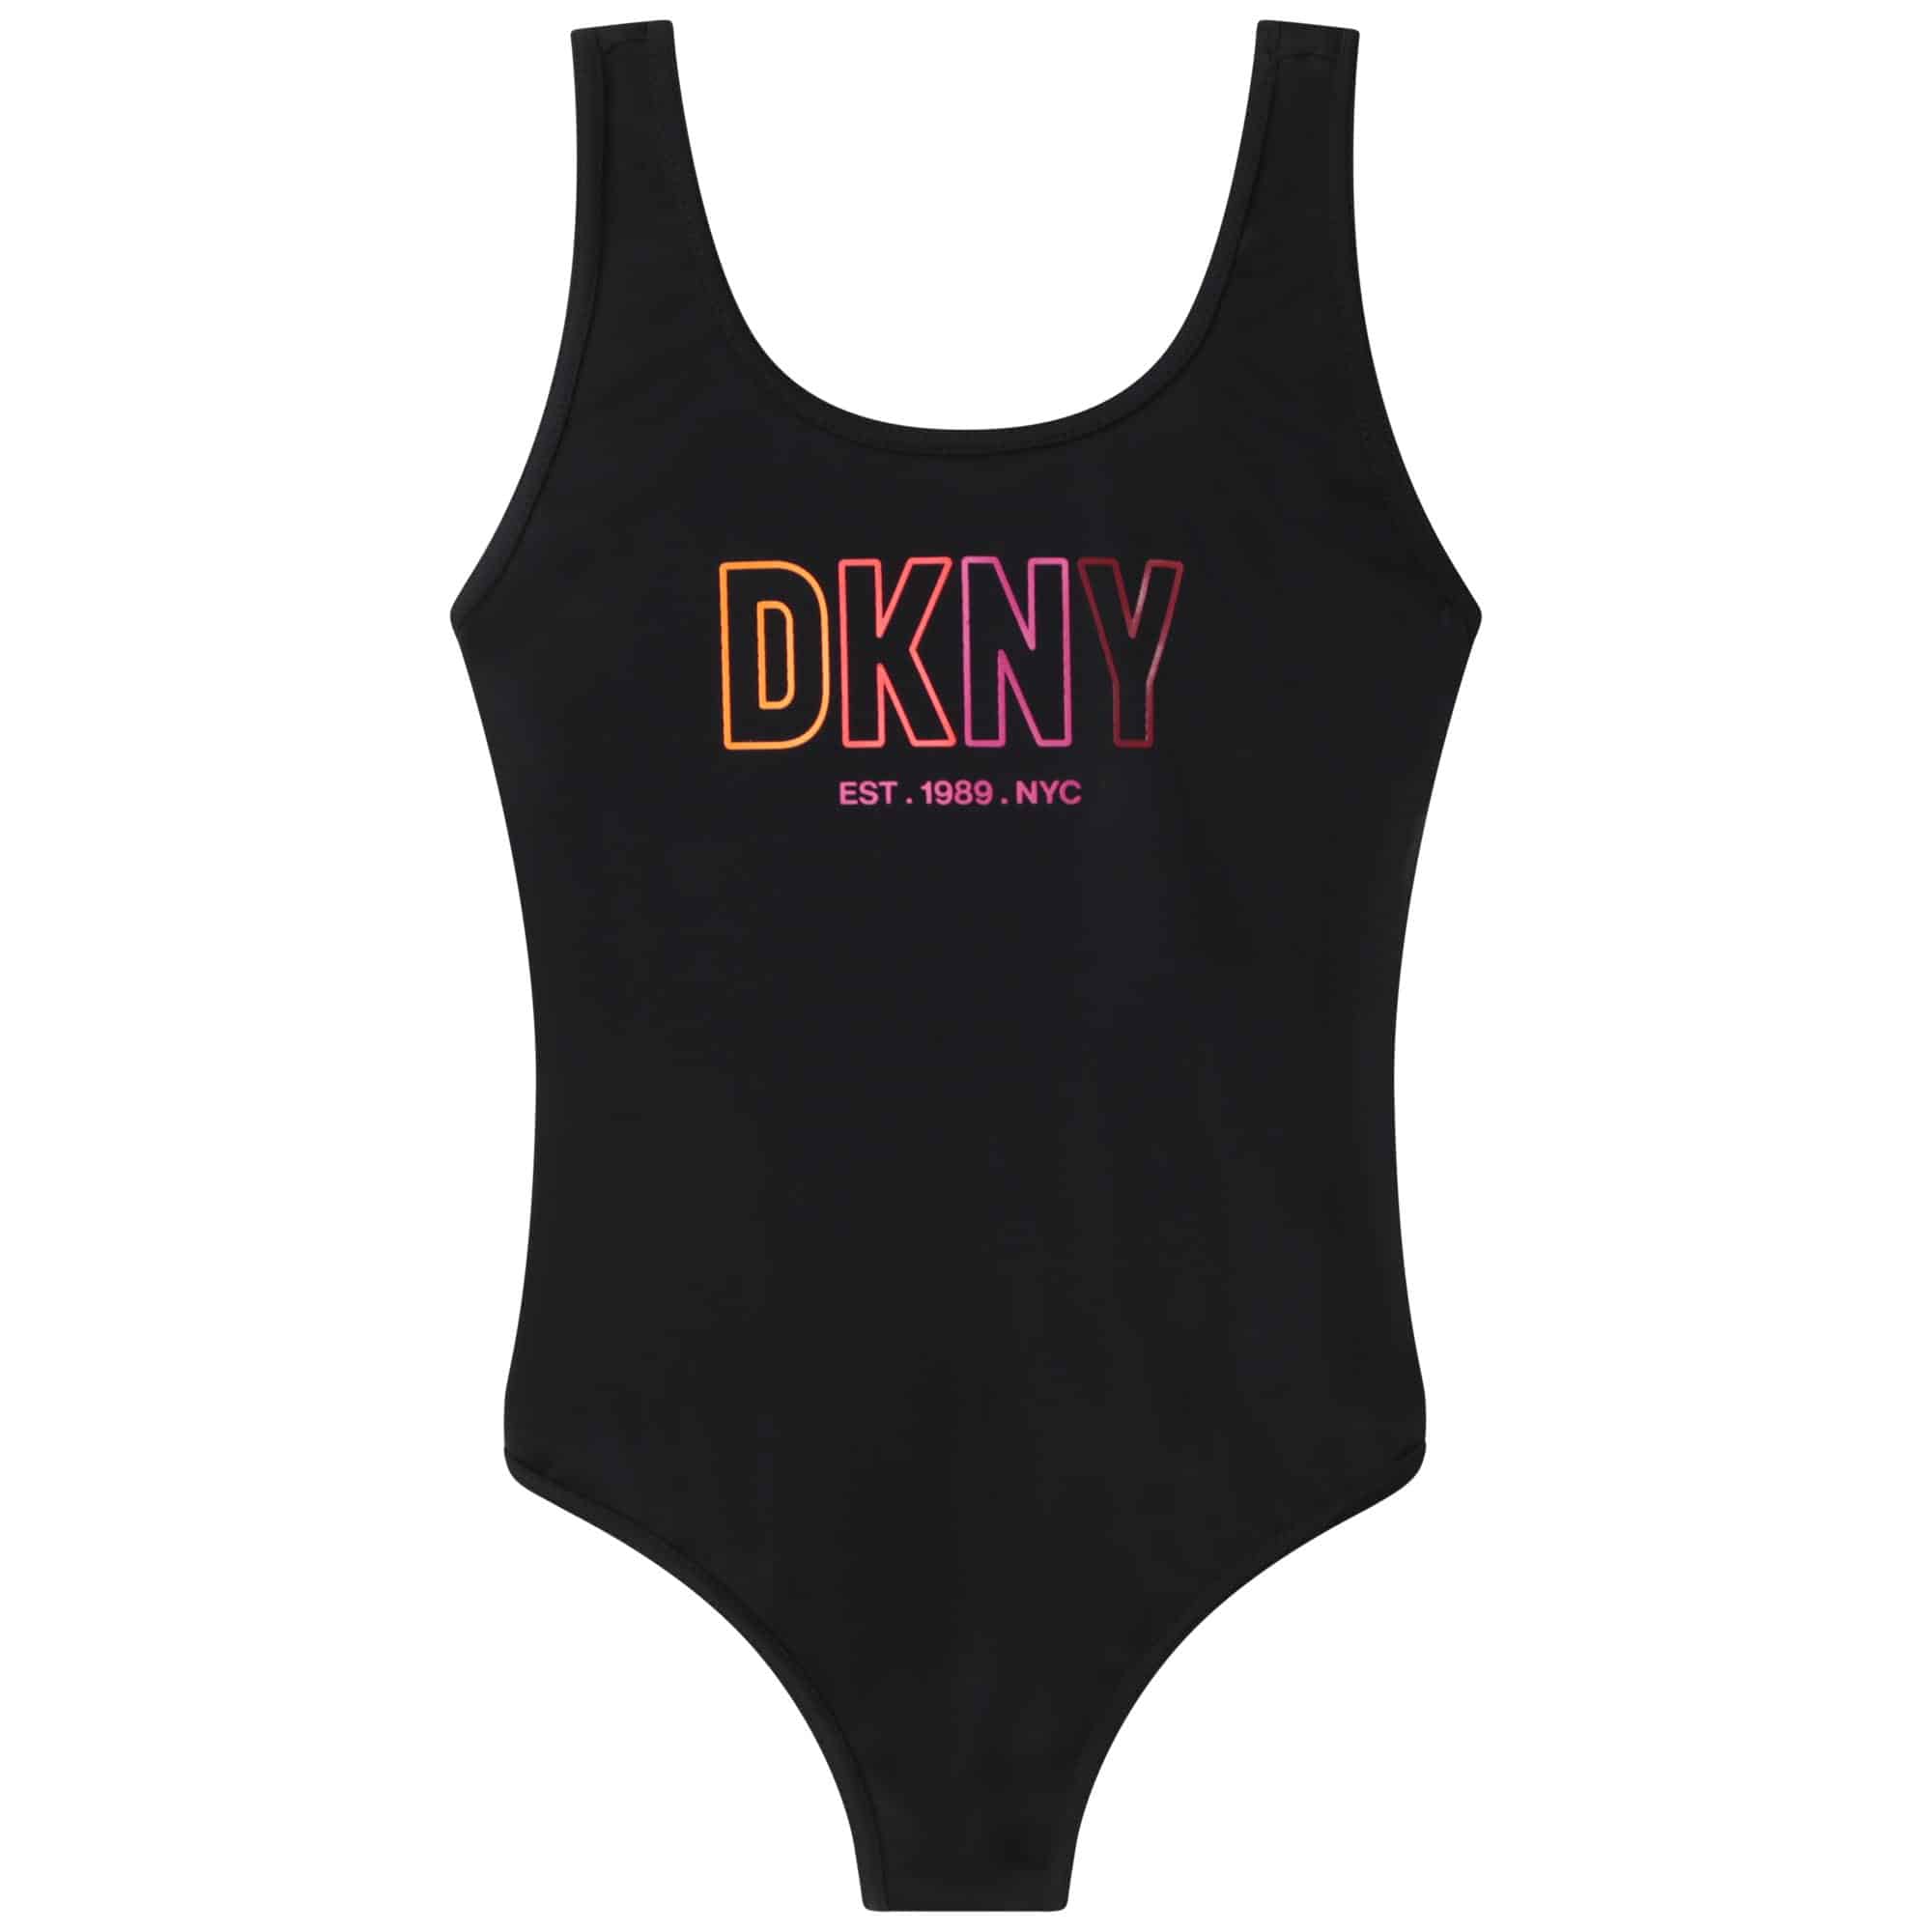 DKNY black girls swimming costume